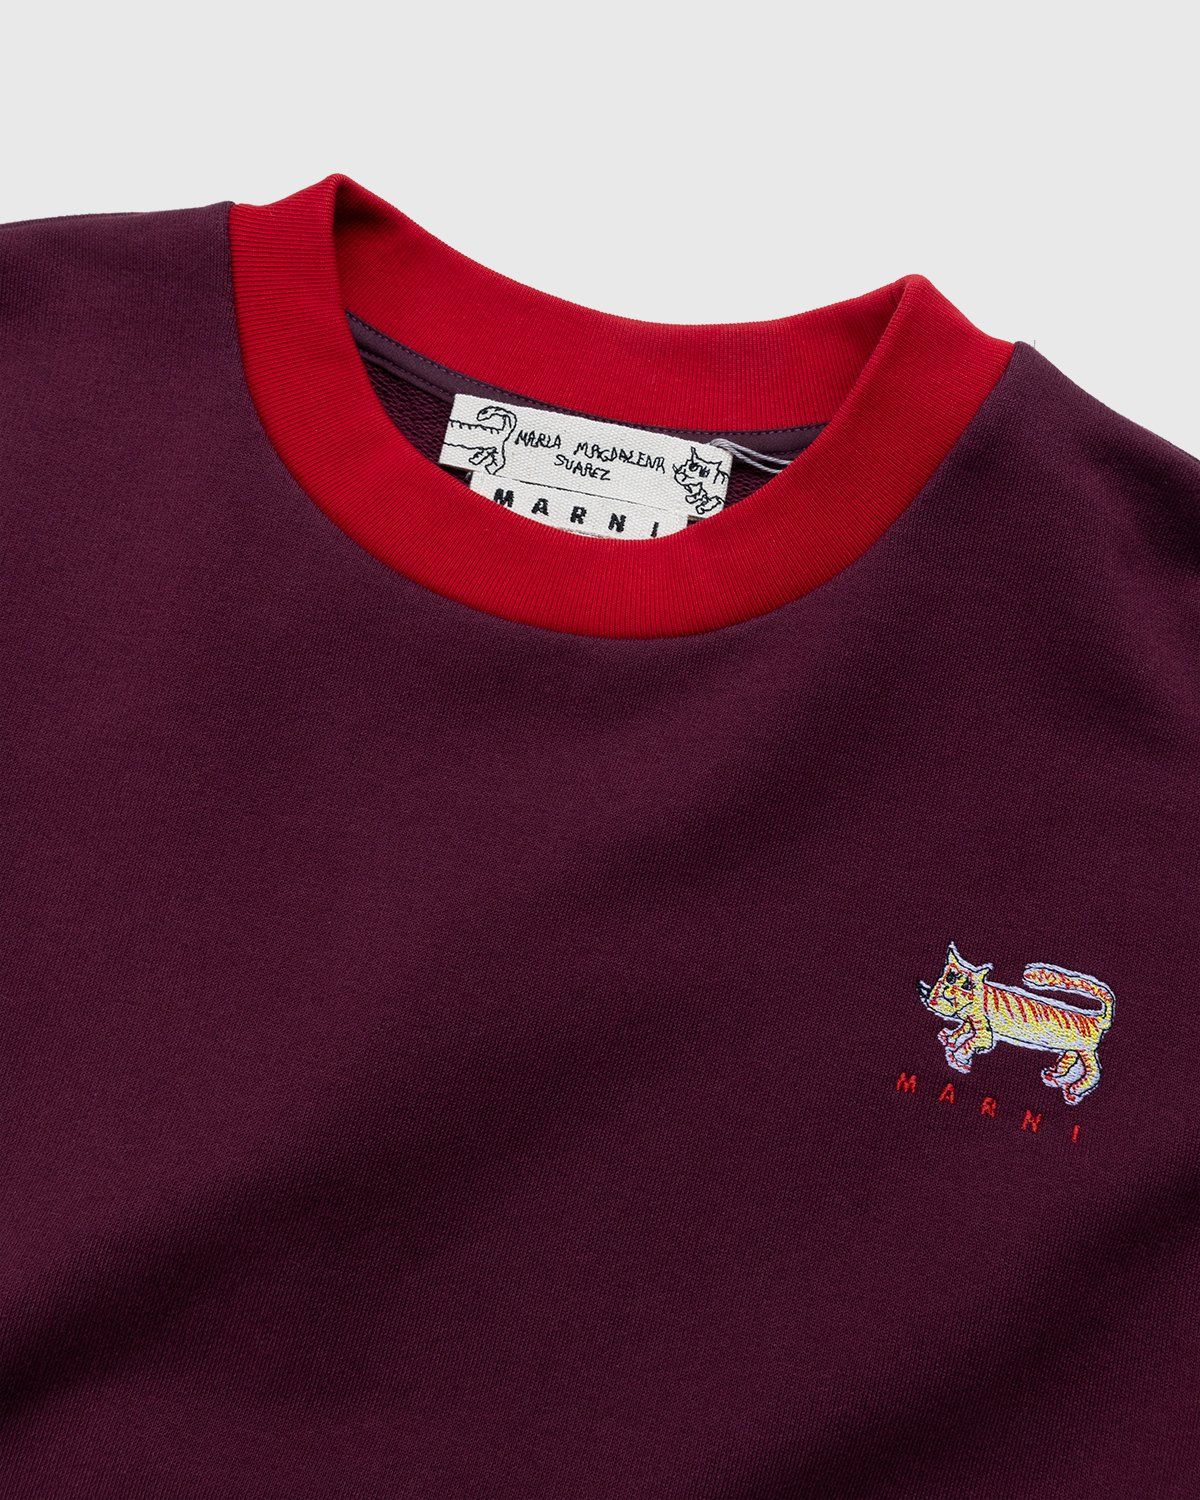 Marni – Logo-Embroidered Sweatshirt Burgundy - Sweatshirts - Red - Image 3